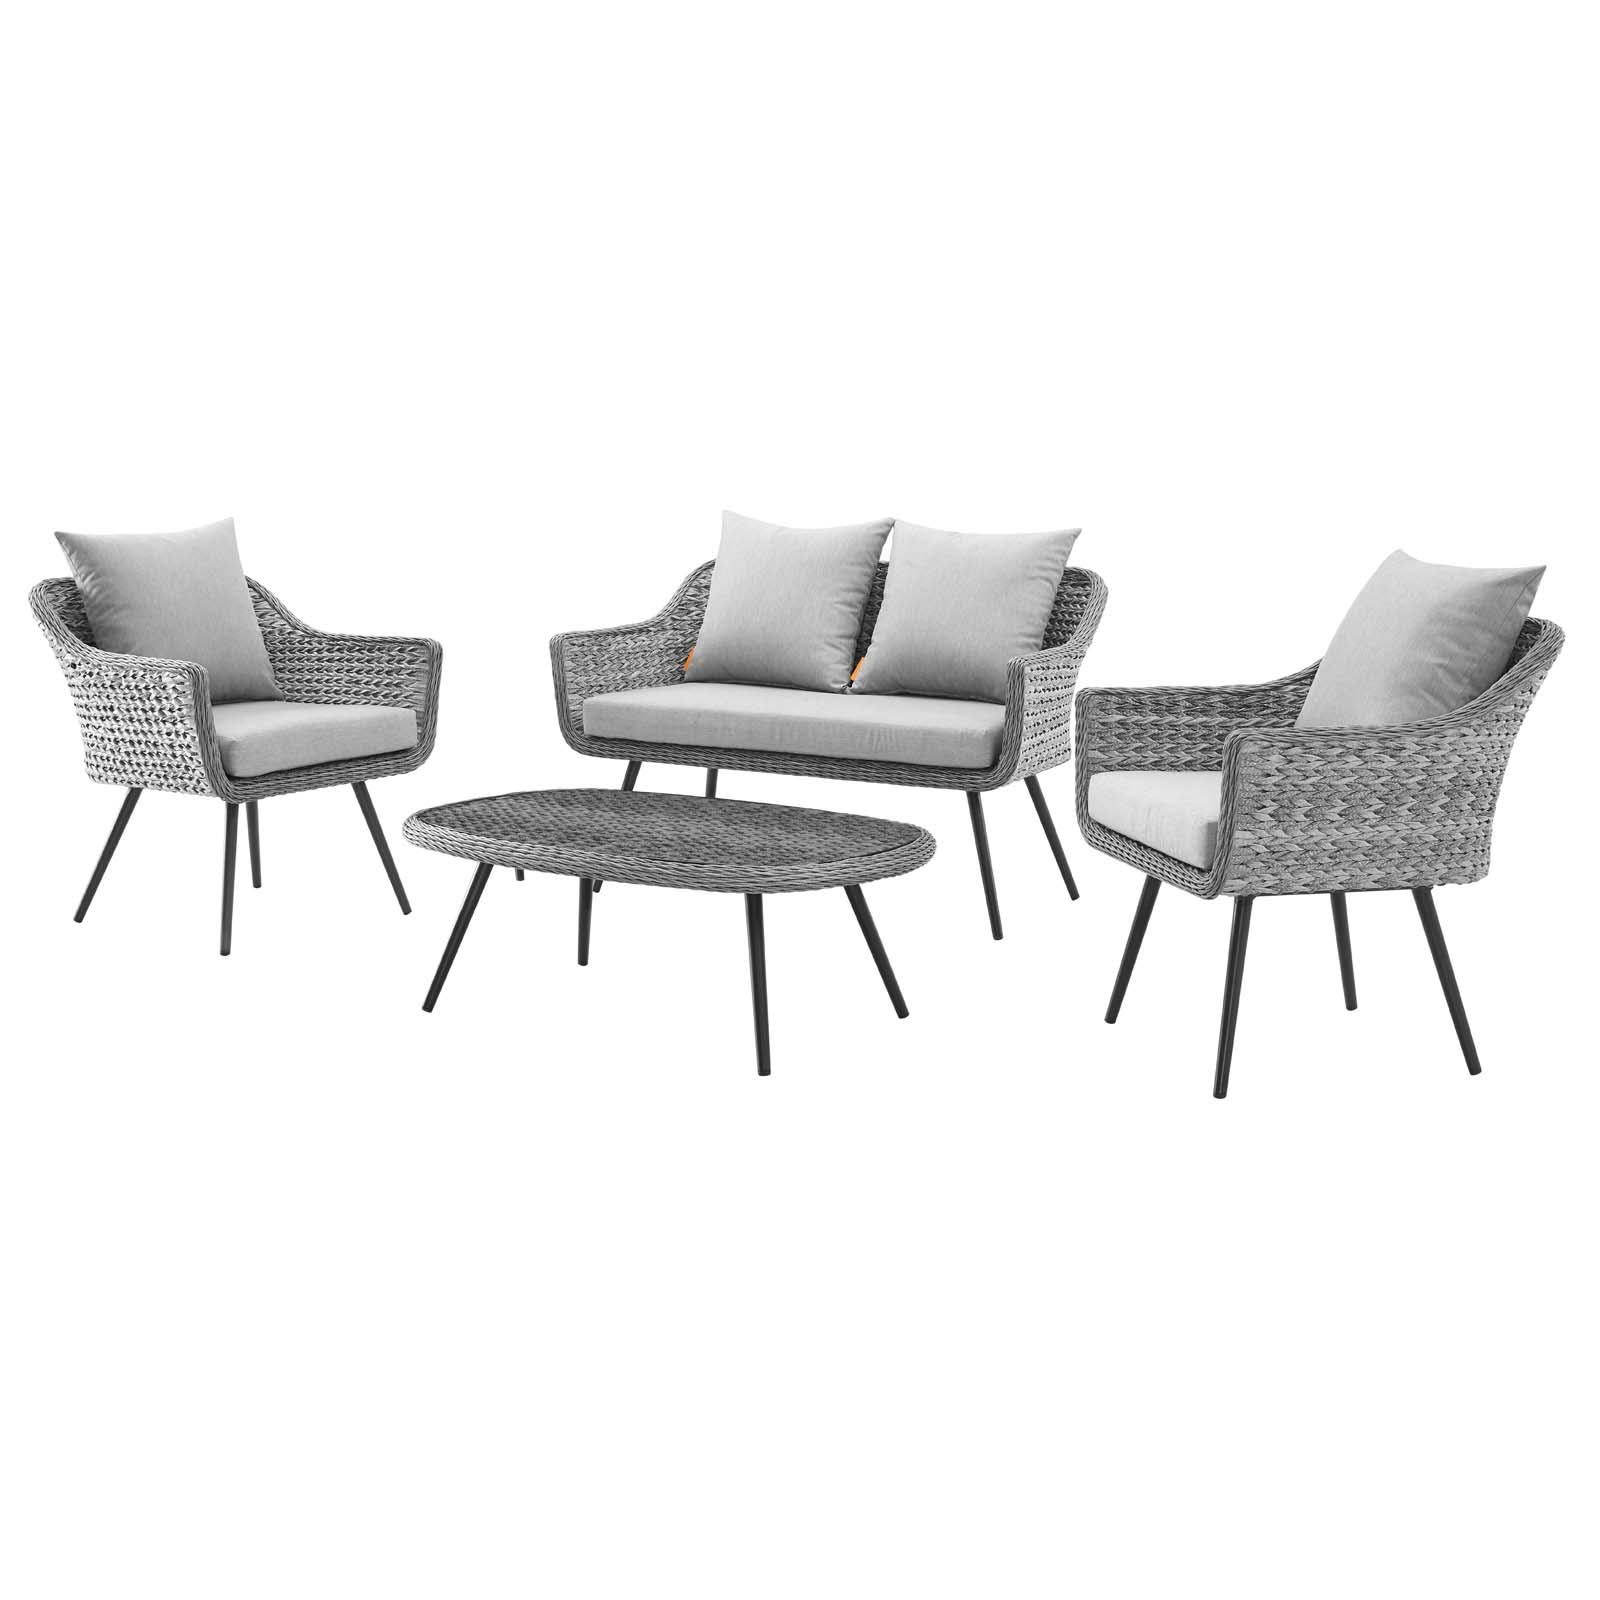 Contemporary Modern Urban Designer Outdoor Patio Balcony Garden Furniture Lounge Sofa, Chair and Coffee Table Set, Aluminum Fabric Wicker Rattan, Grey Gray - image 1 of 9